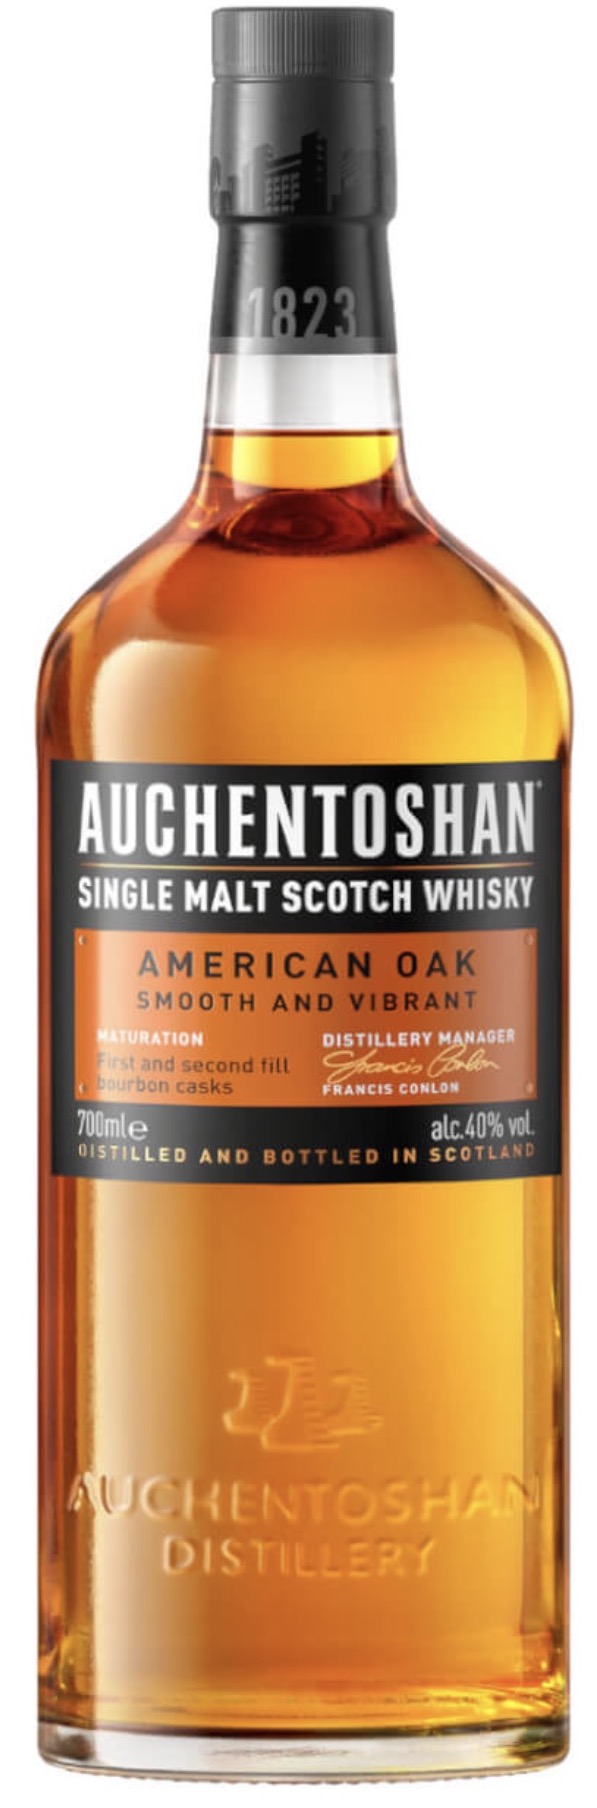 Auchentoshan American Oak Single Malt Scotch Whisky 40% 0,7 L